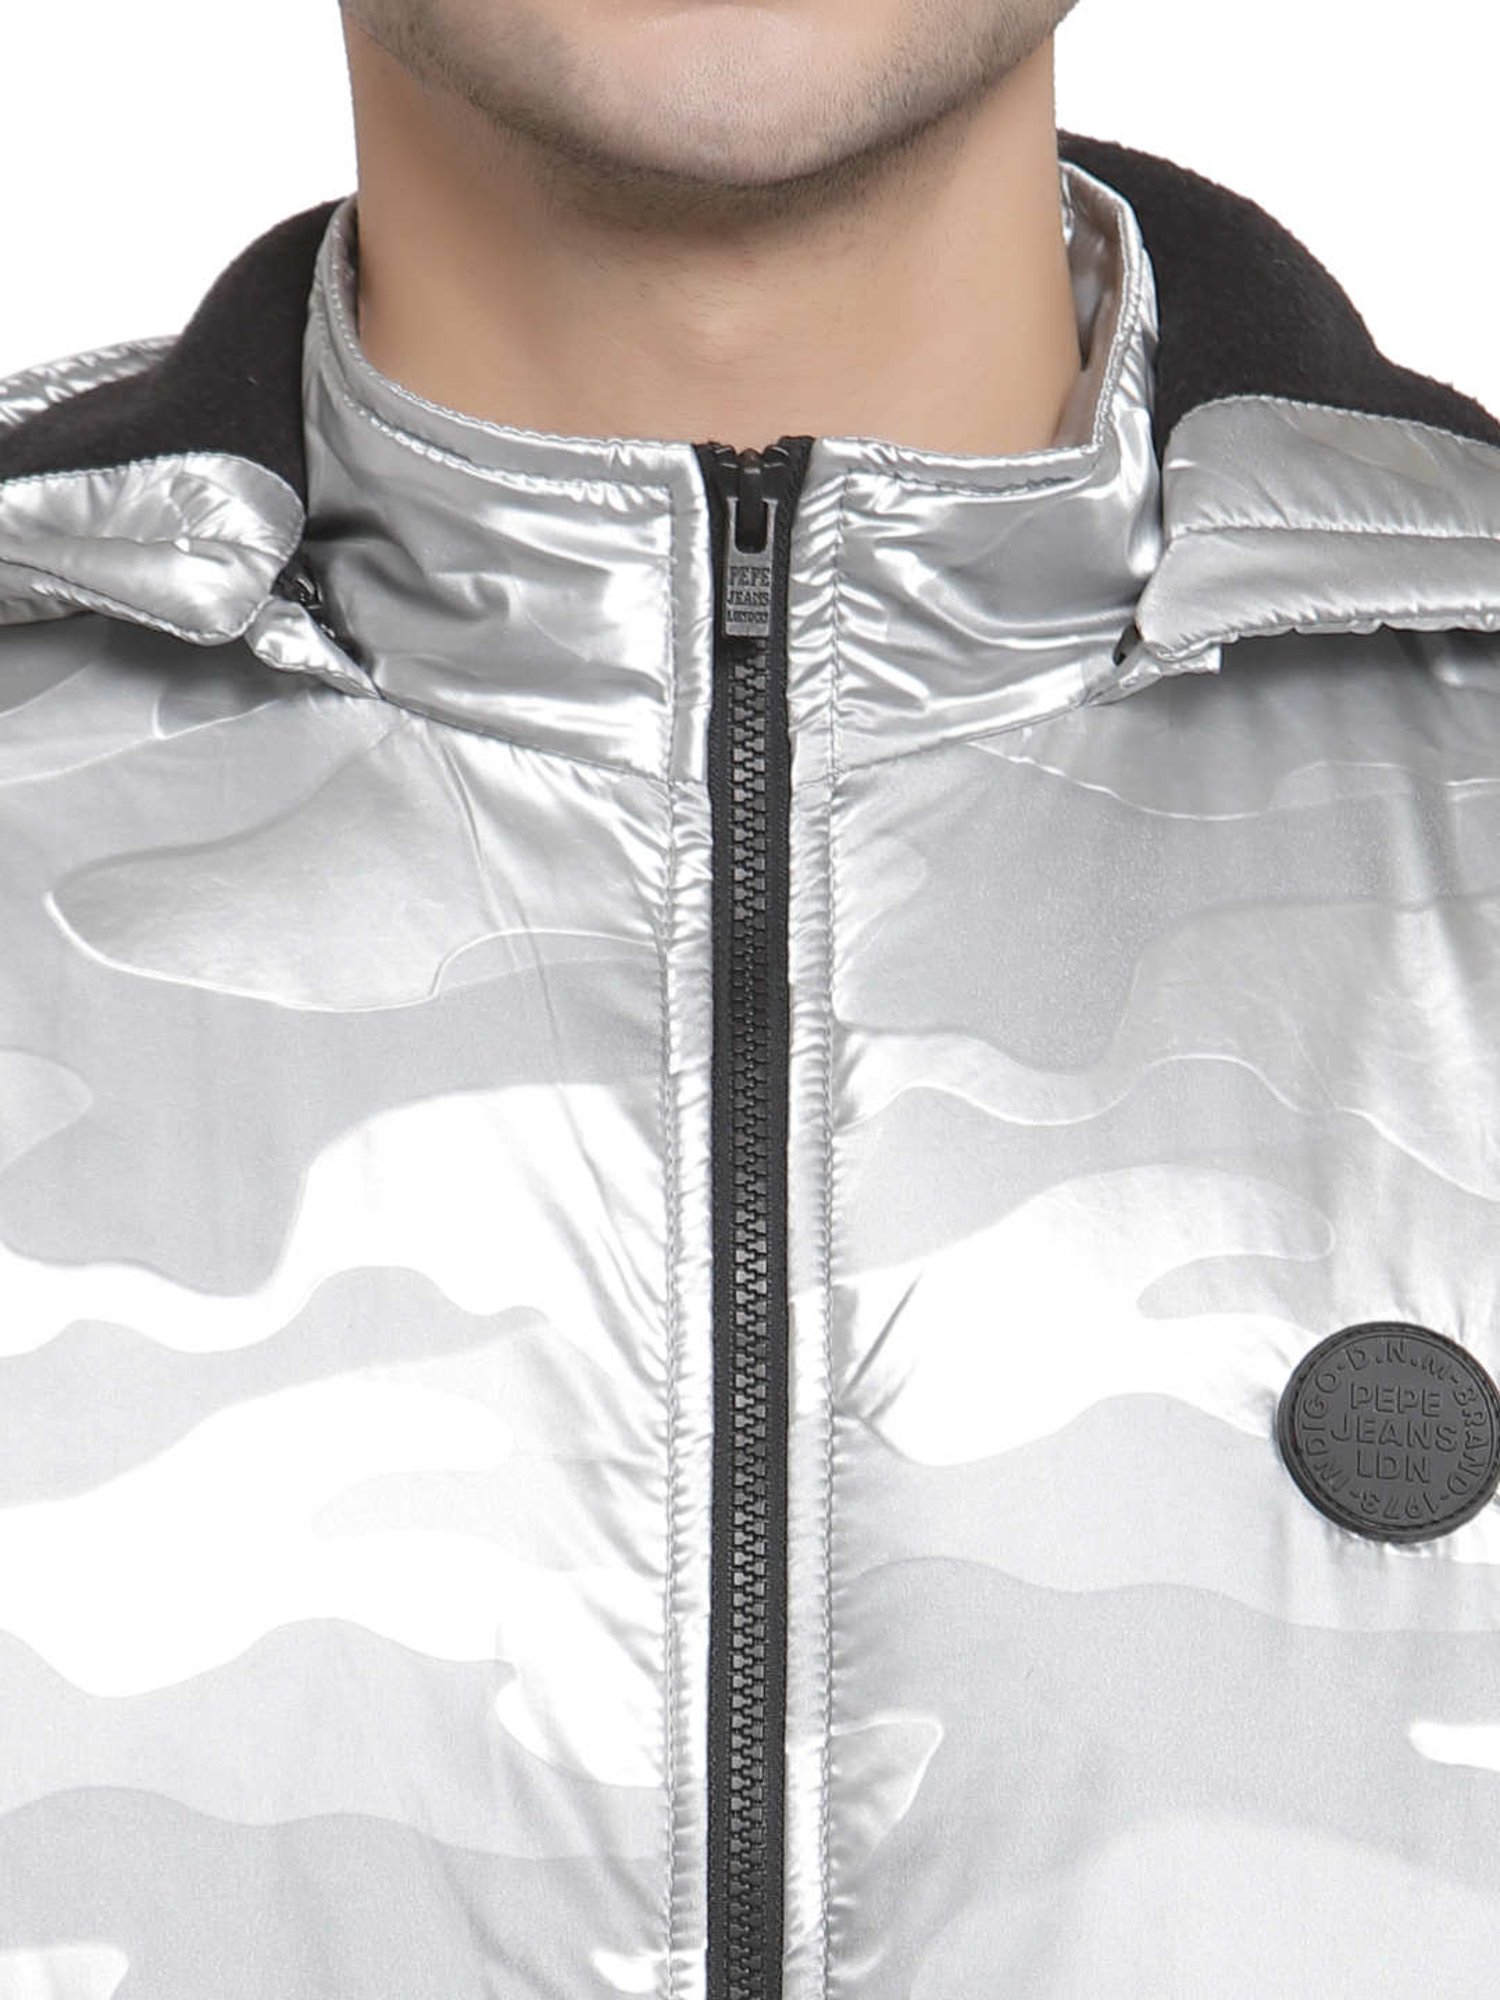 Quicksilver X Men Jacket | Quicksilver Leather Costume